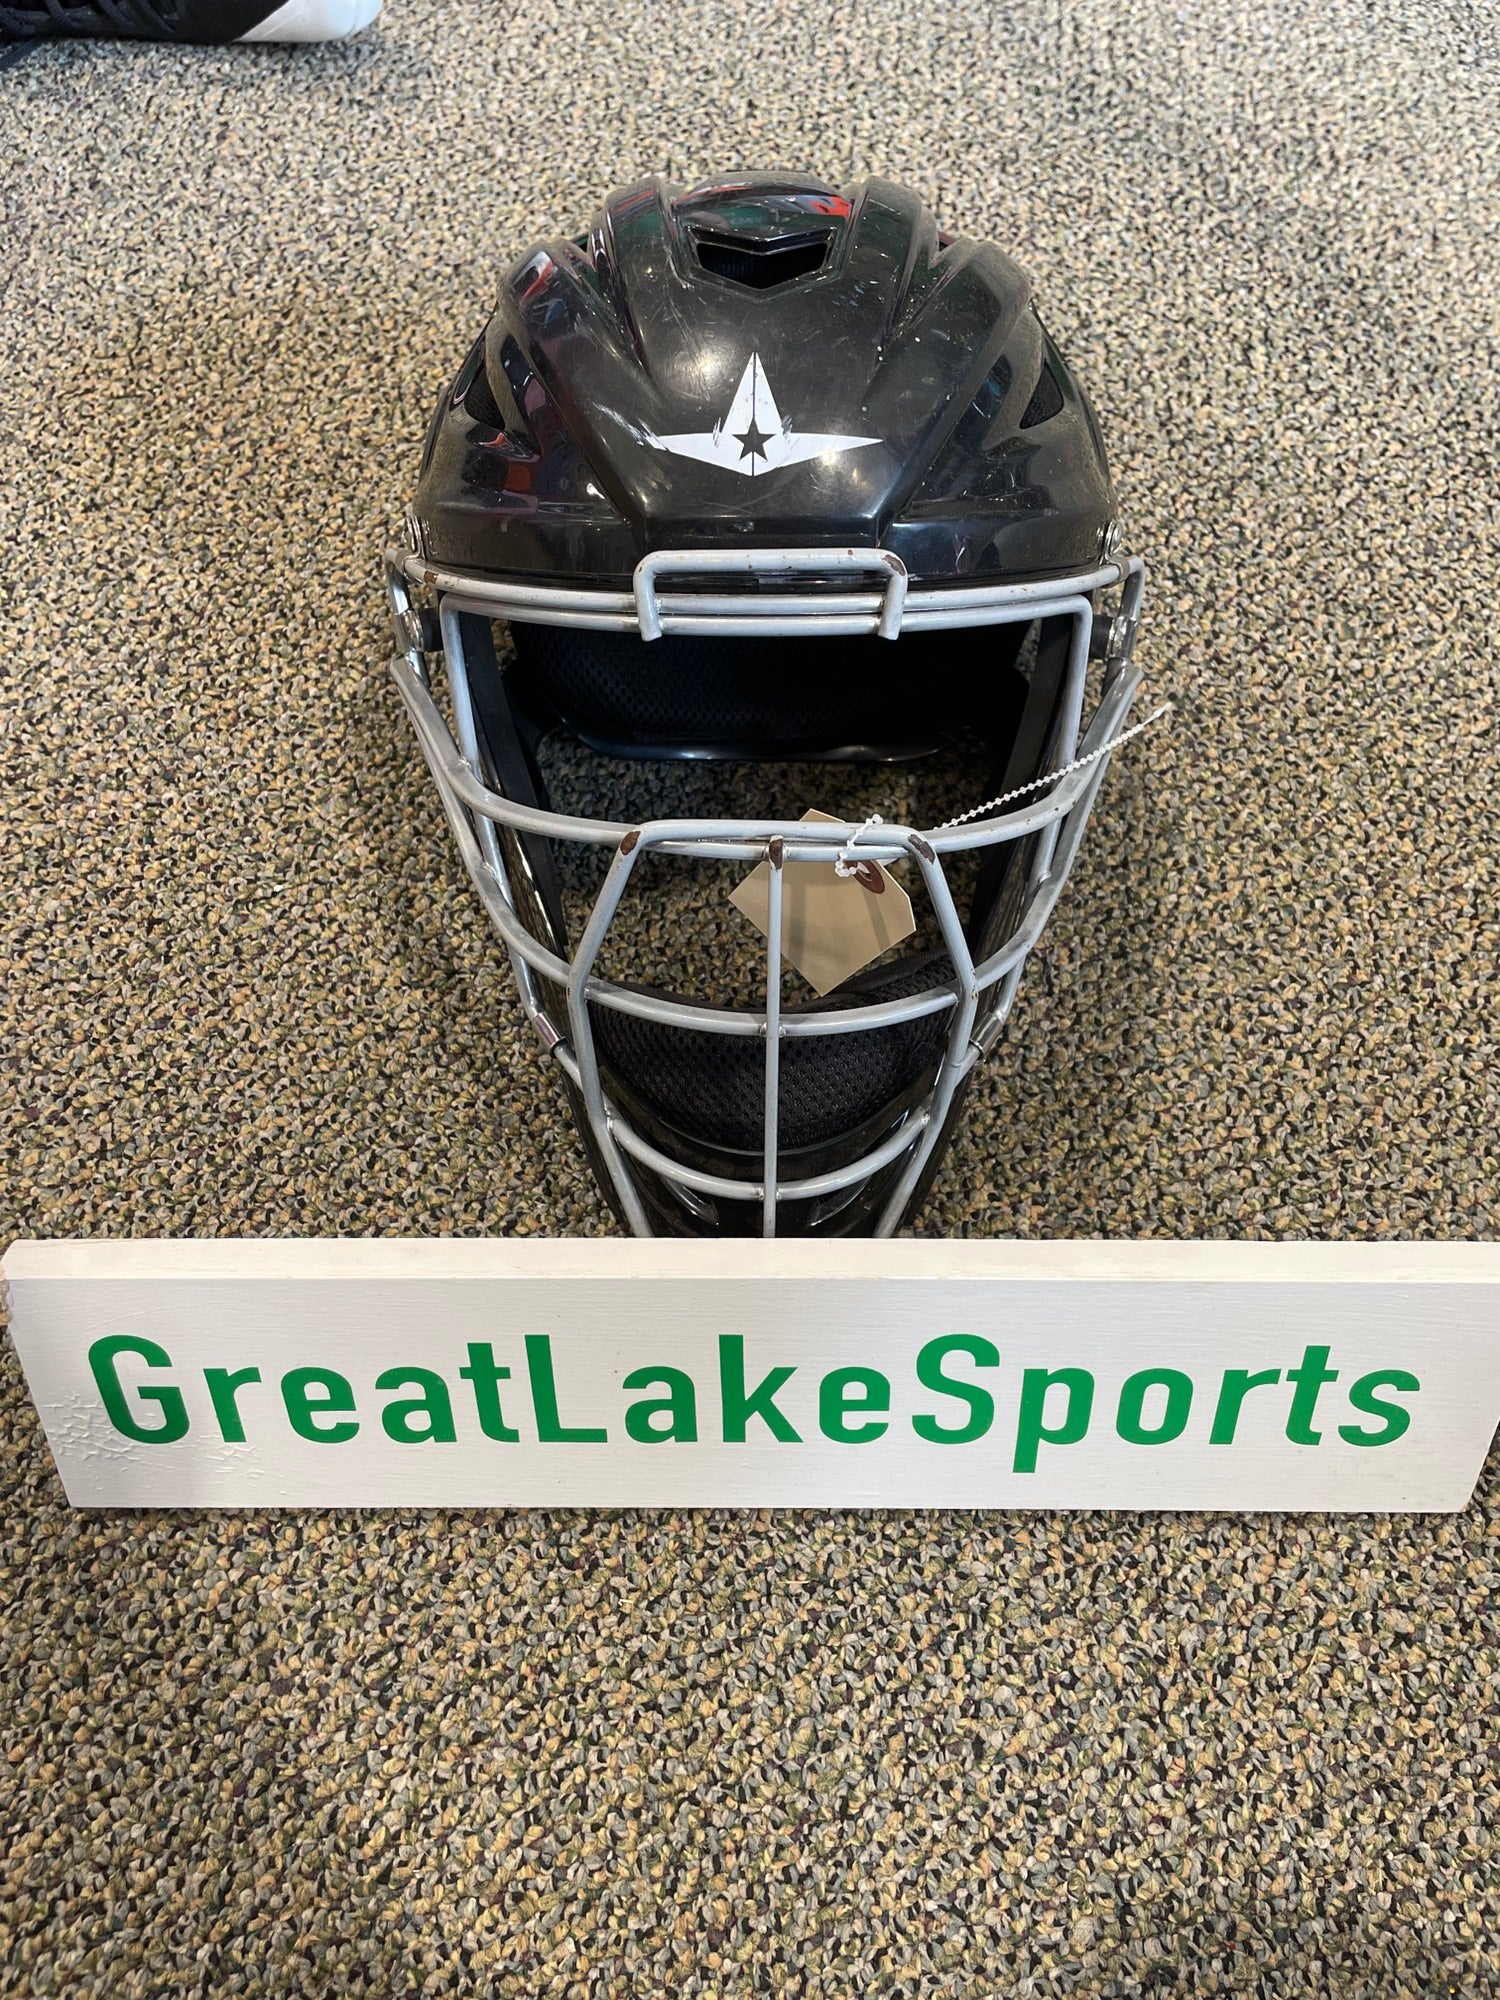 All-Star Sports MVP2500 Adult Baseball Softball Protective Catchers Mask,  Black, 1 Piece - Ralphs